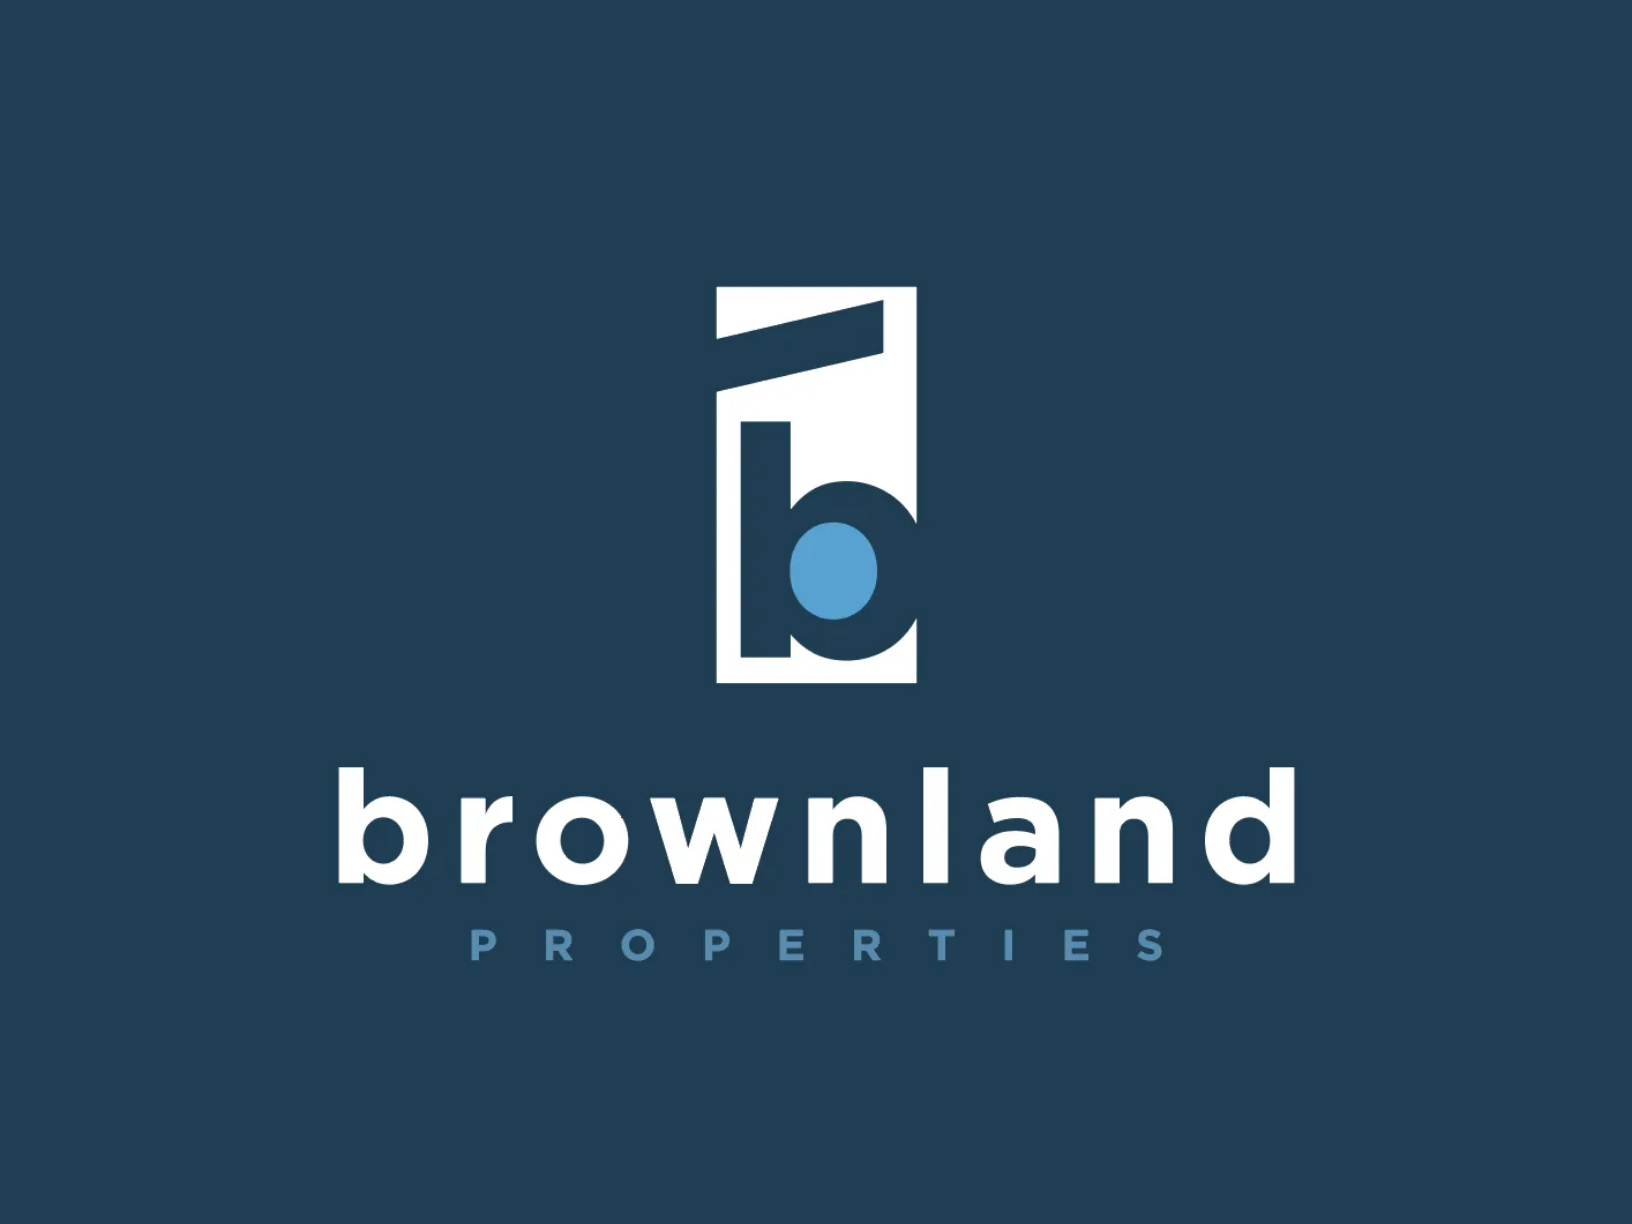 Brownland Properties logo rebrand for a real estate agency